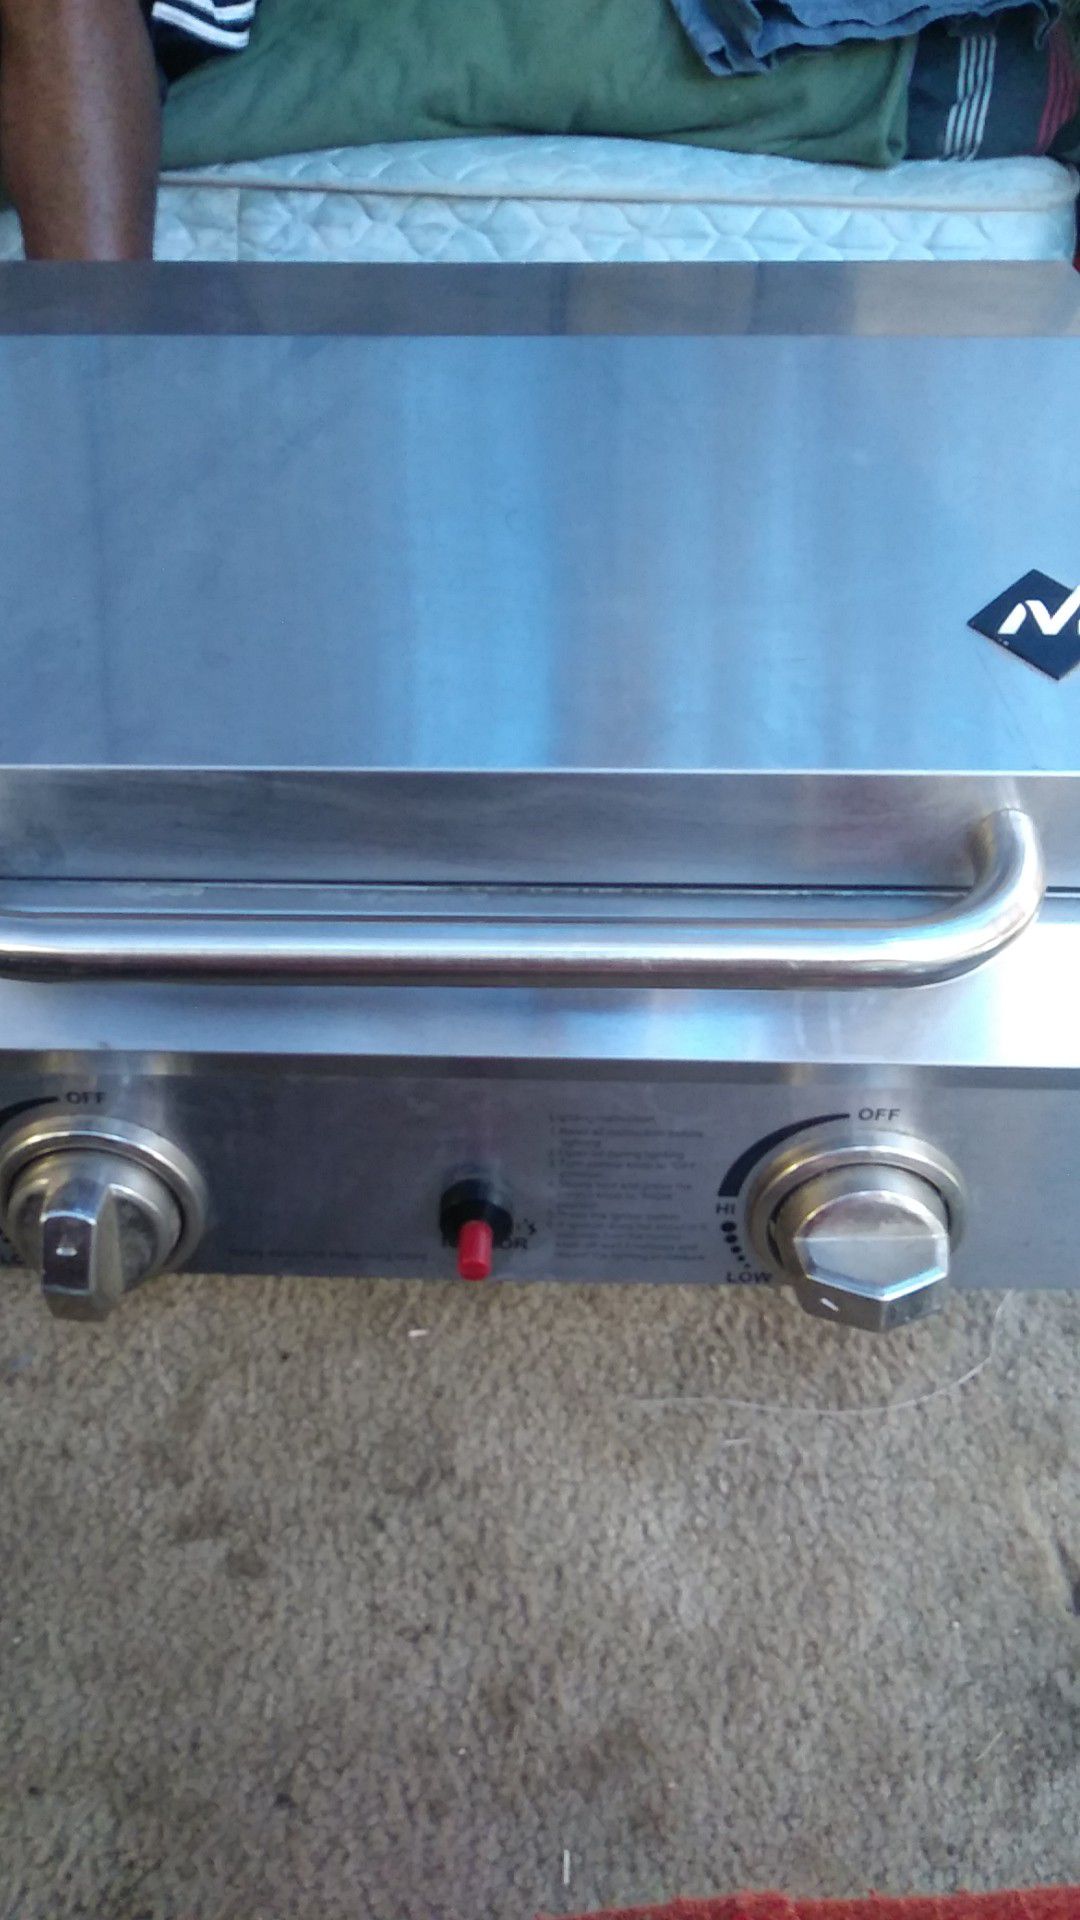 Member's Mark Portable Stainless Steel 2-Burner Gas Grill